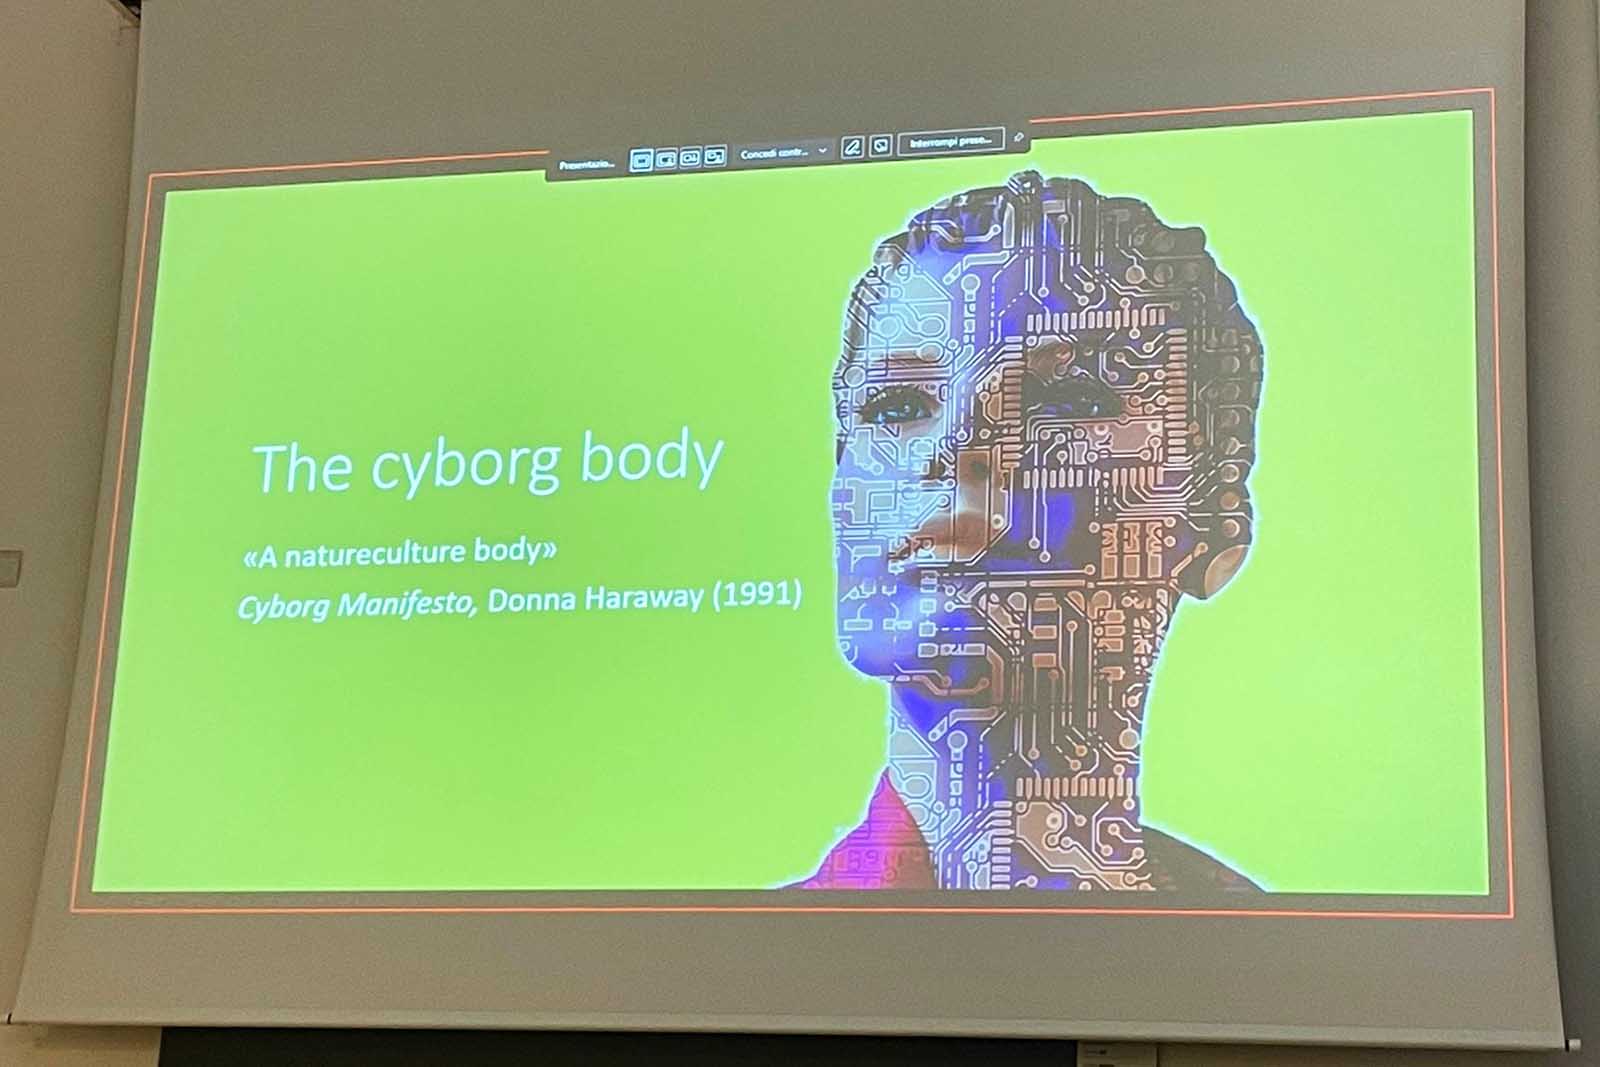 The cyborg body